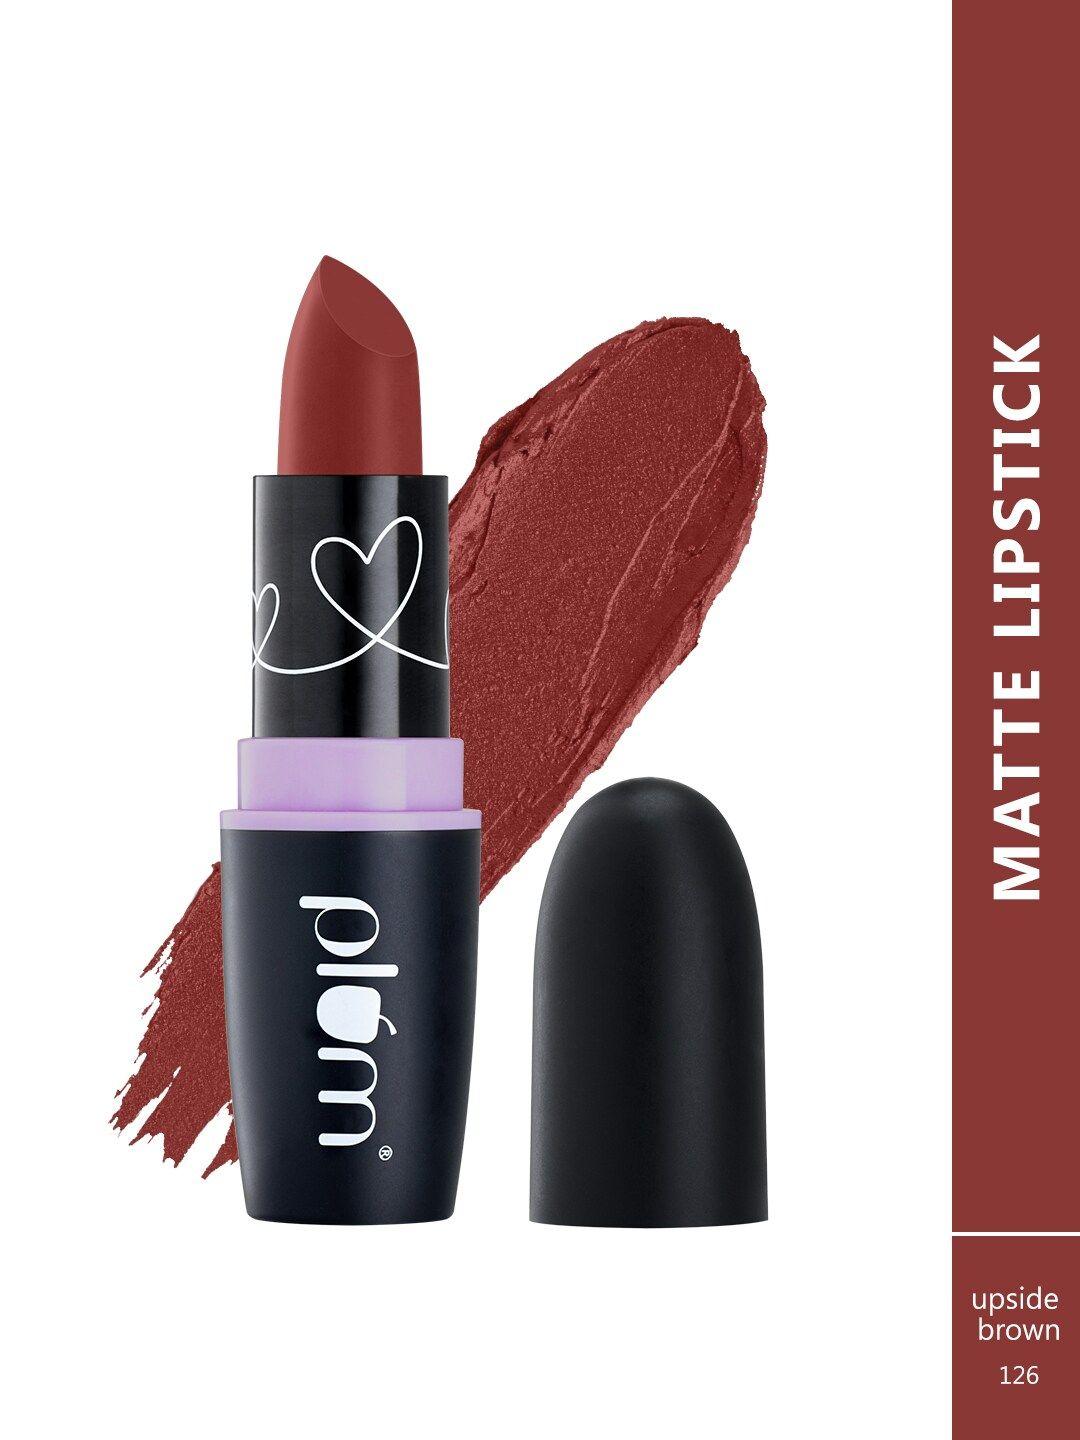 plum matterrific highly pigmented non-drying vegan lipstick with vit e- upside brown 126